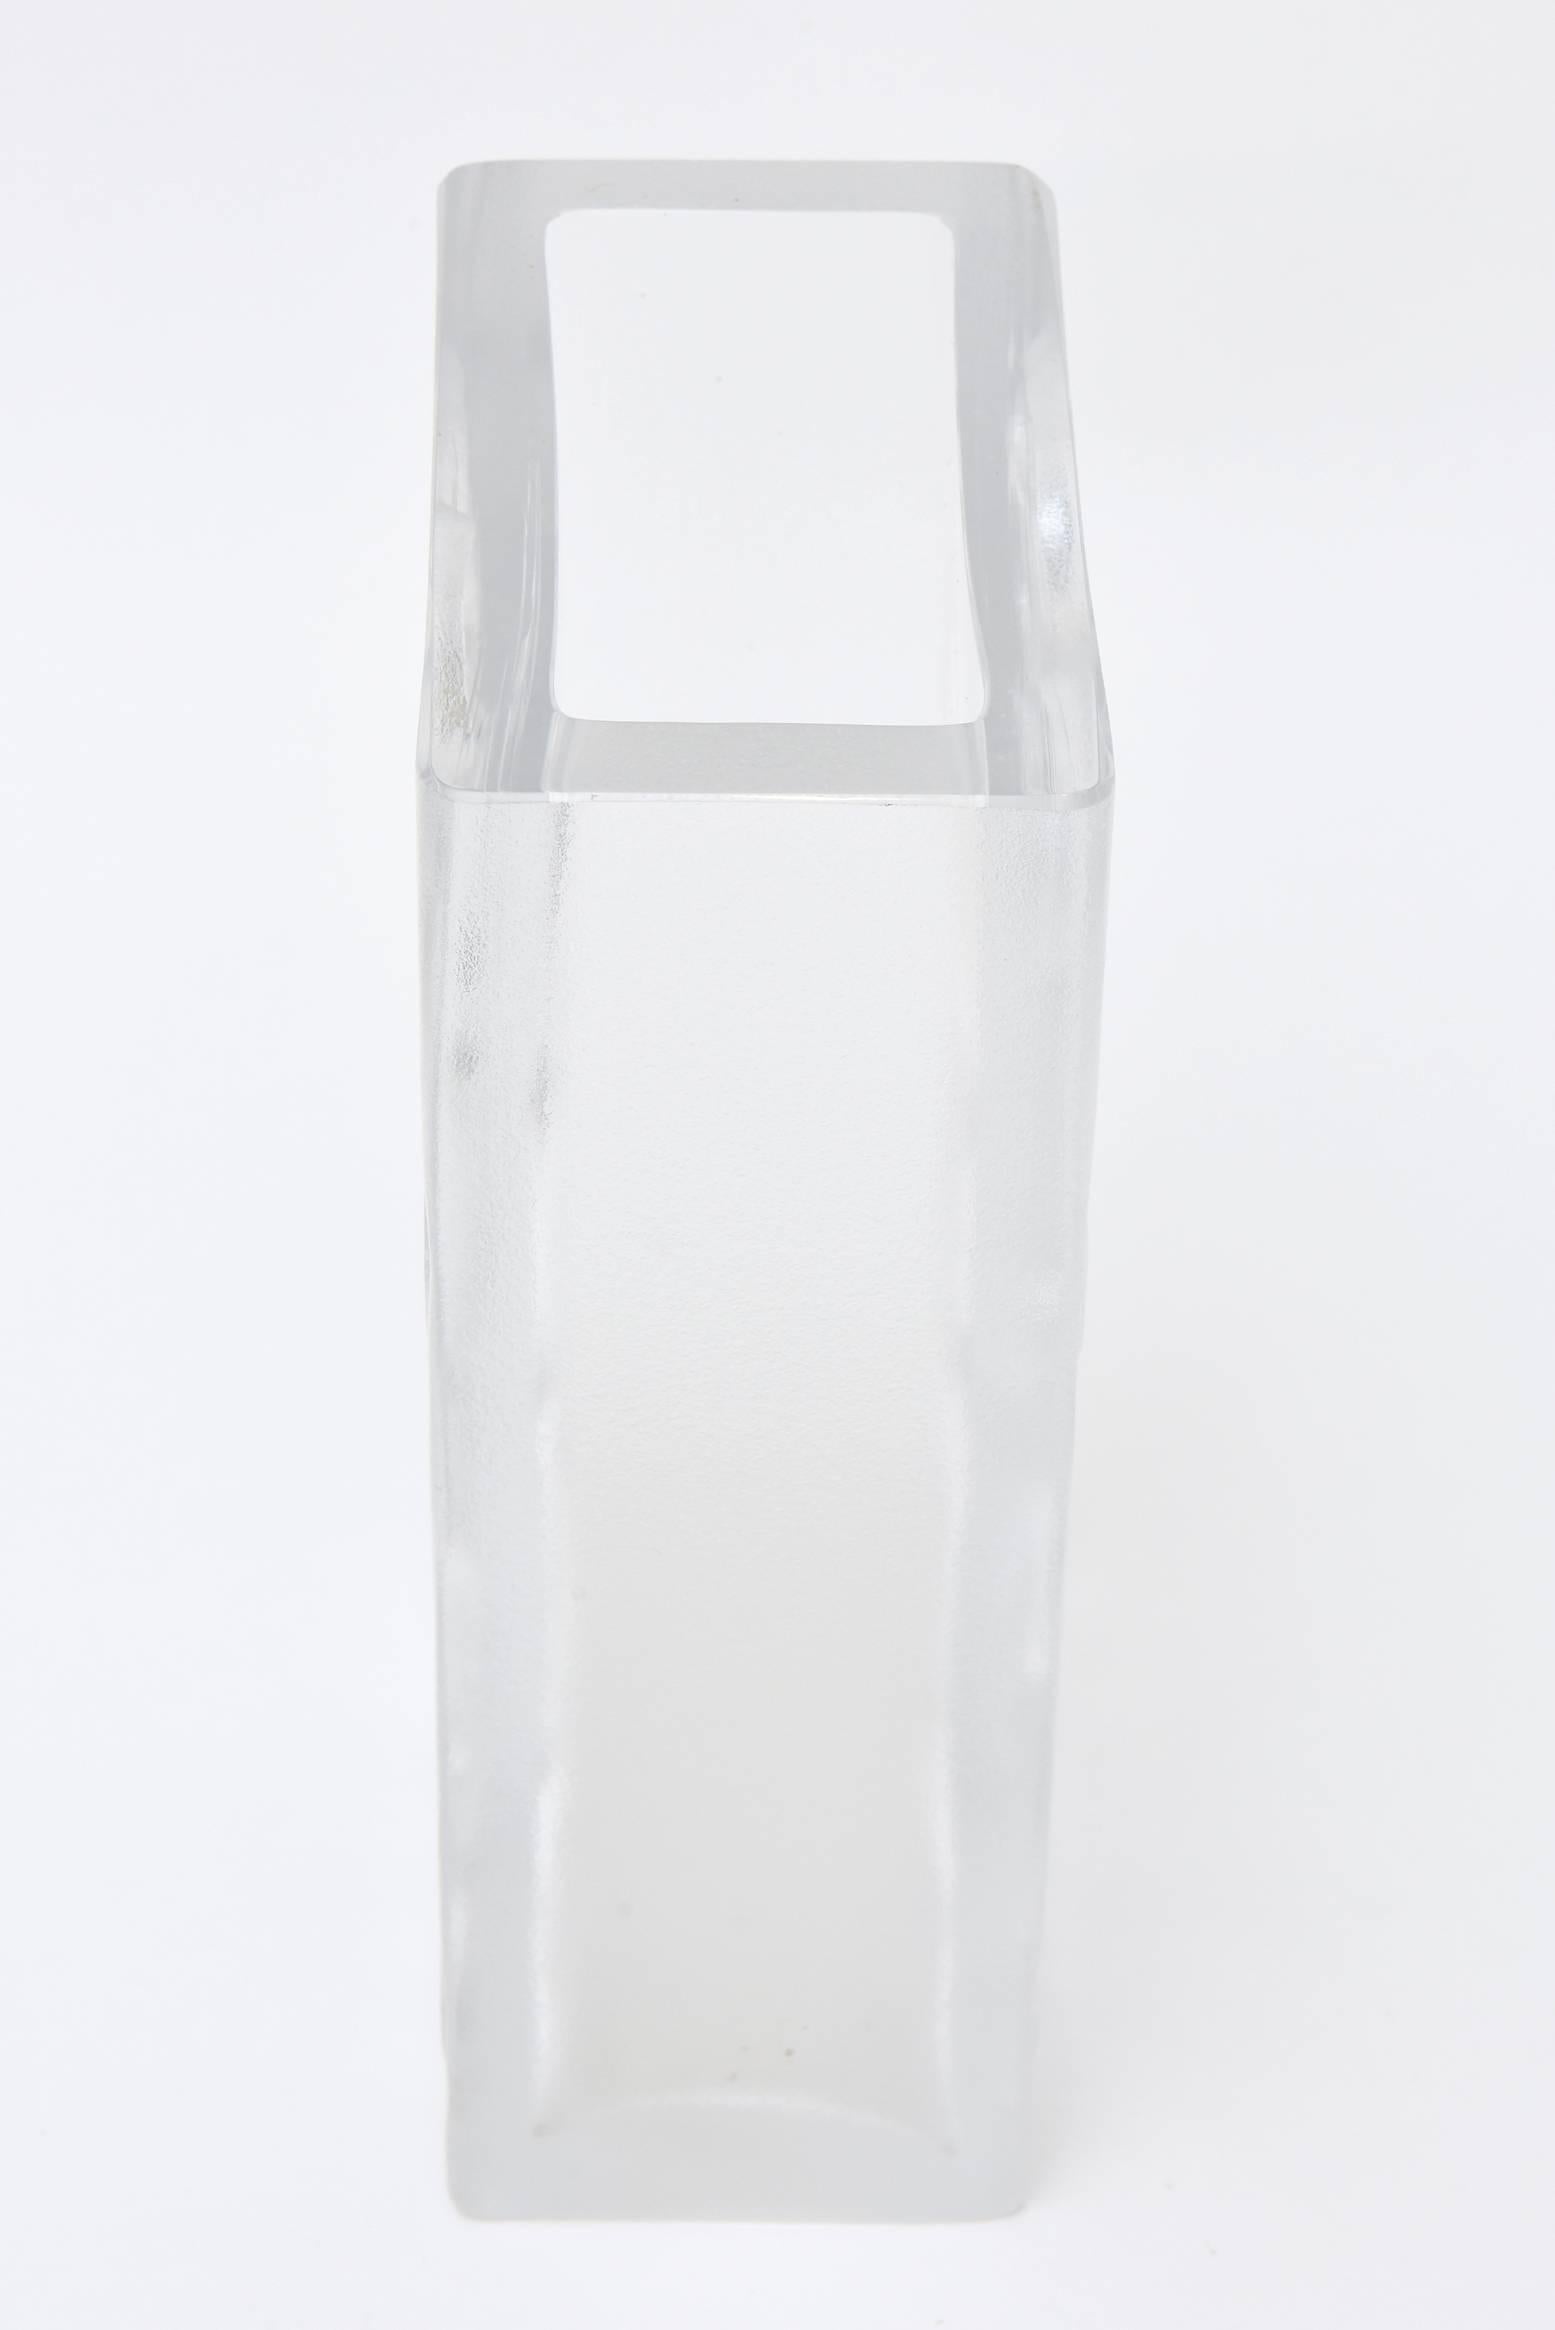 Mid-20th Century Hallmarked Modernist Danish Cutout Square Glass Vase Desk Accessory